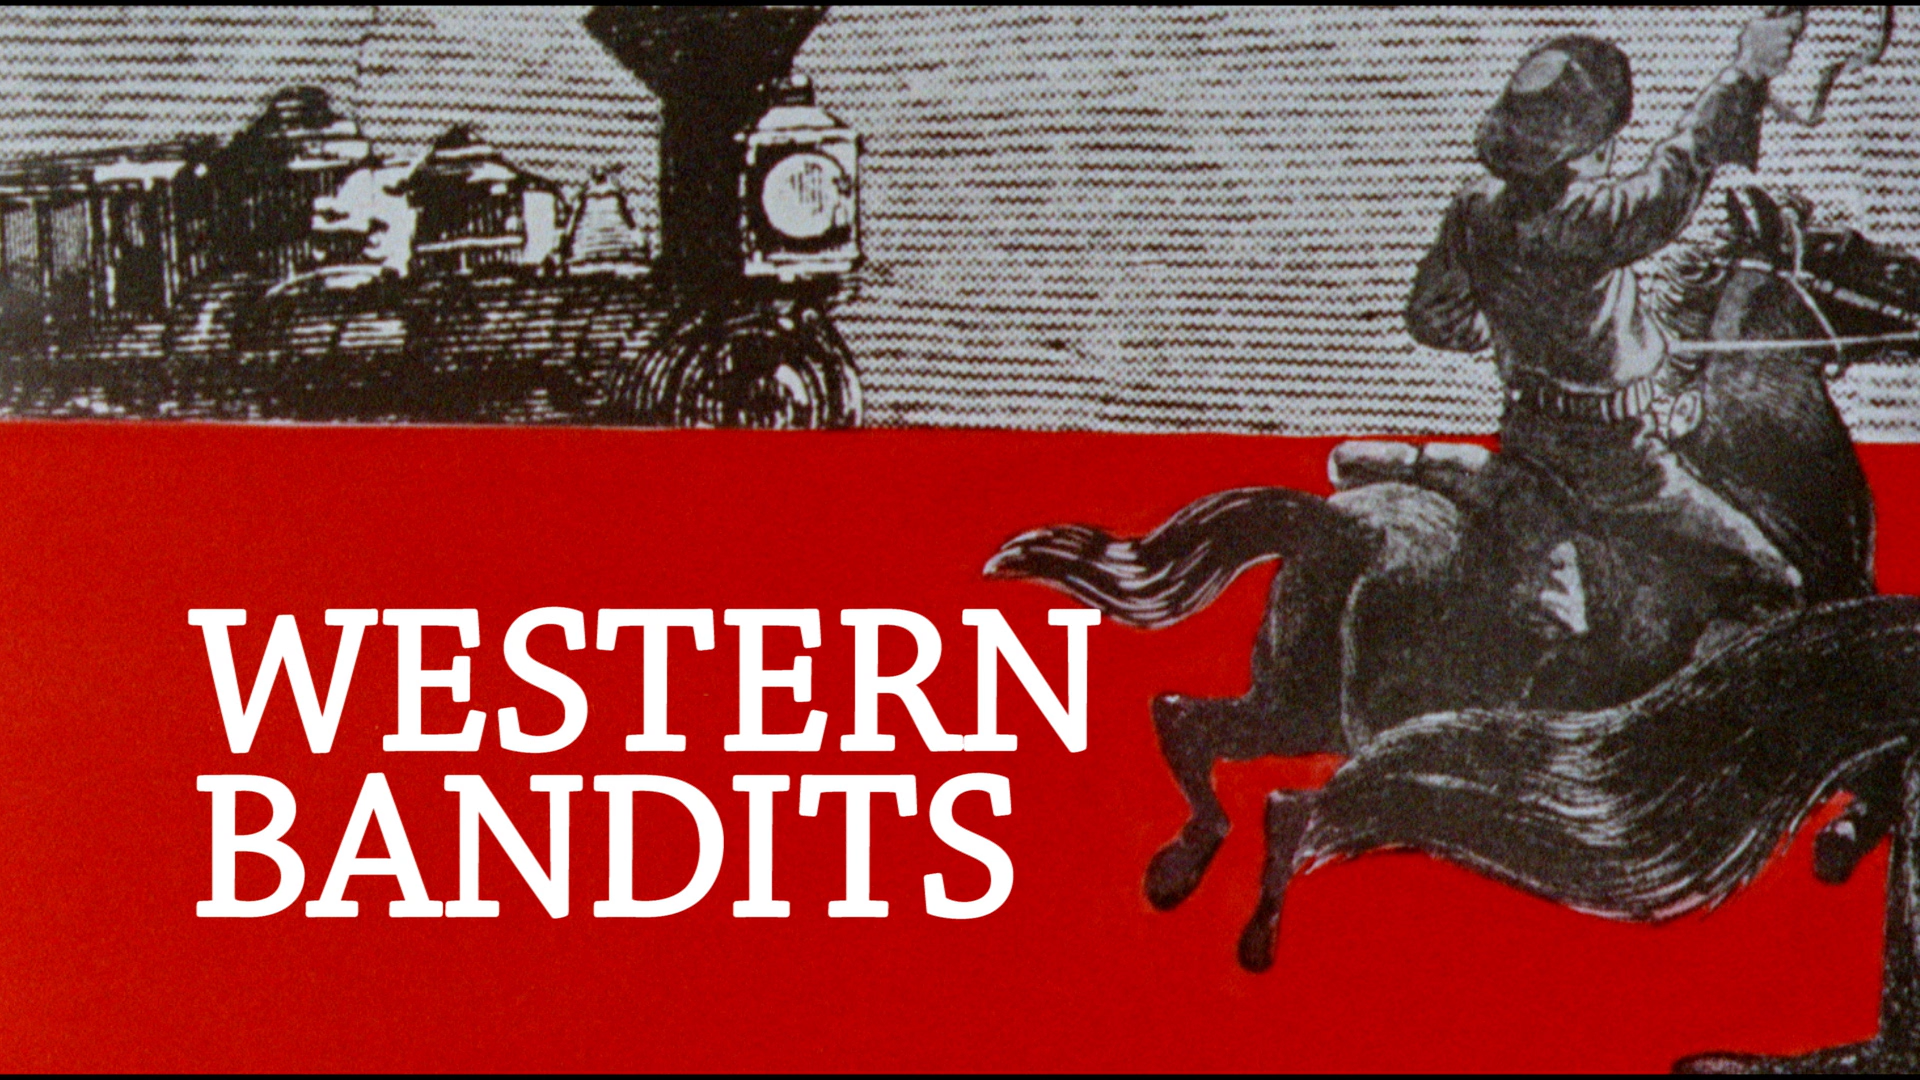 Western Bandits